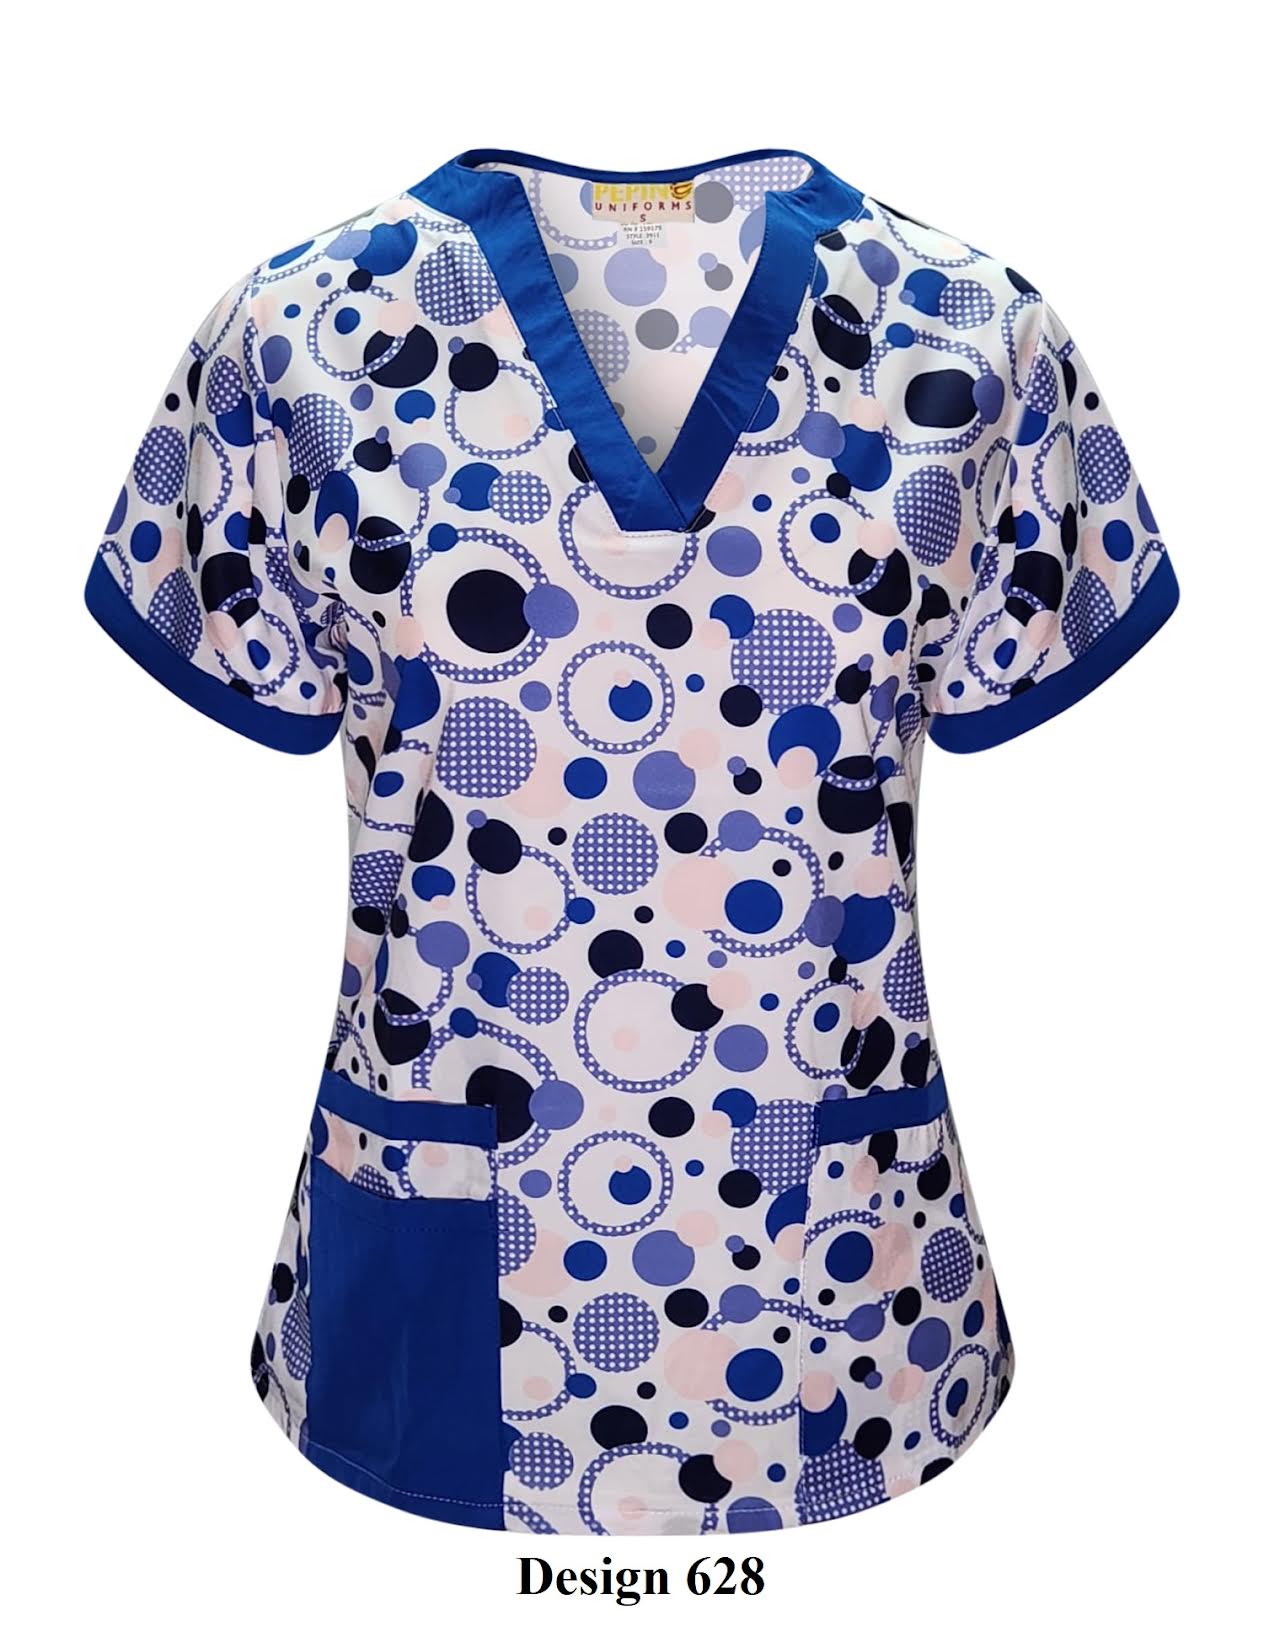 Pepino Uniforms Printed Blue Polka Dot V-Neck Top